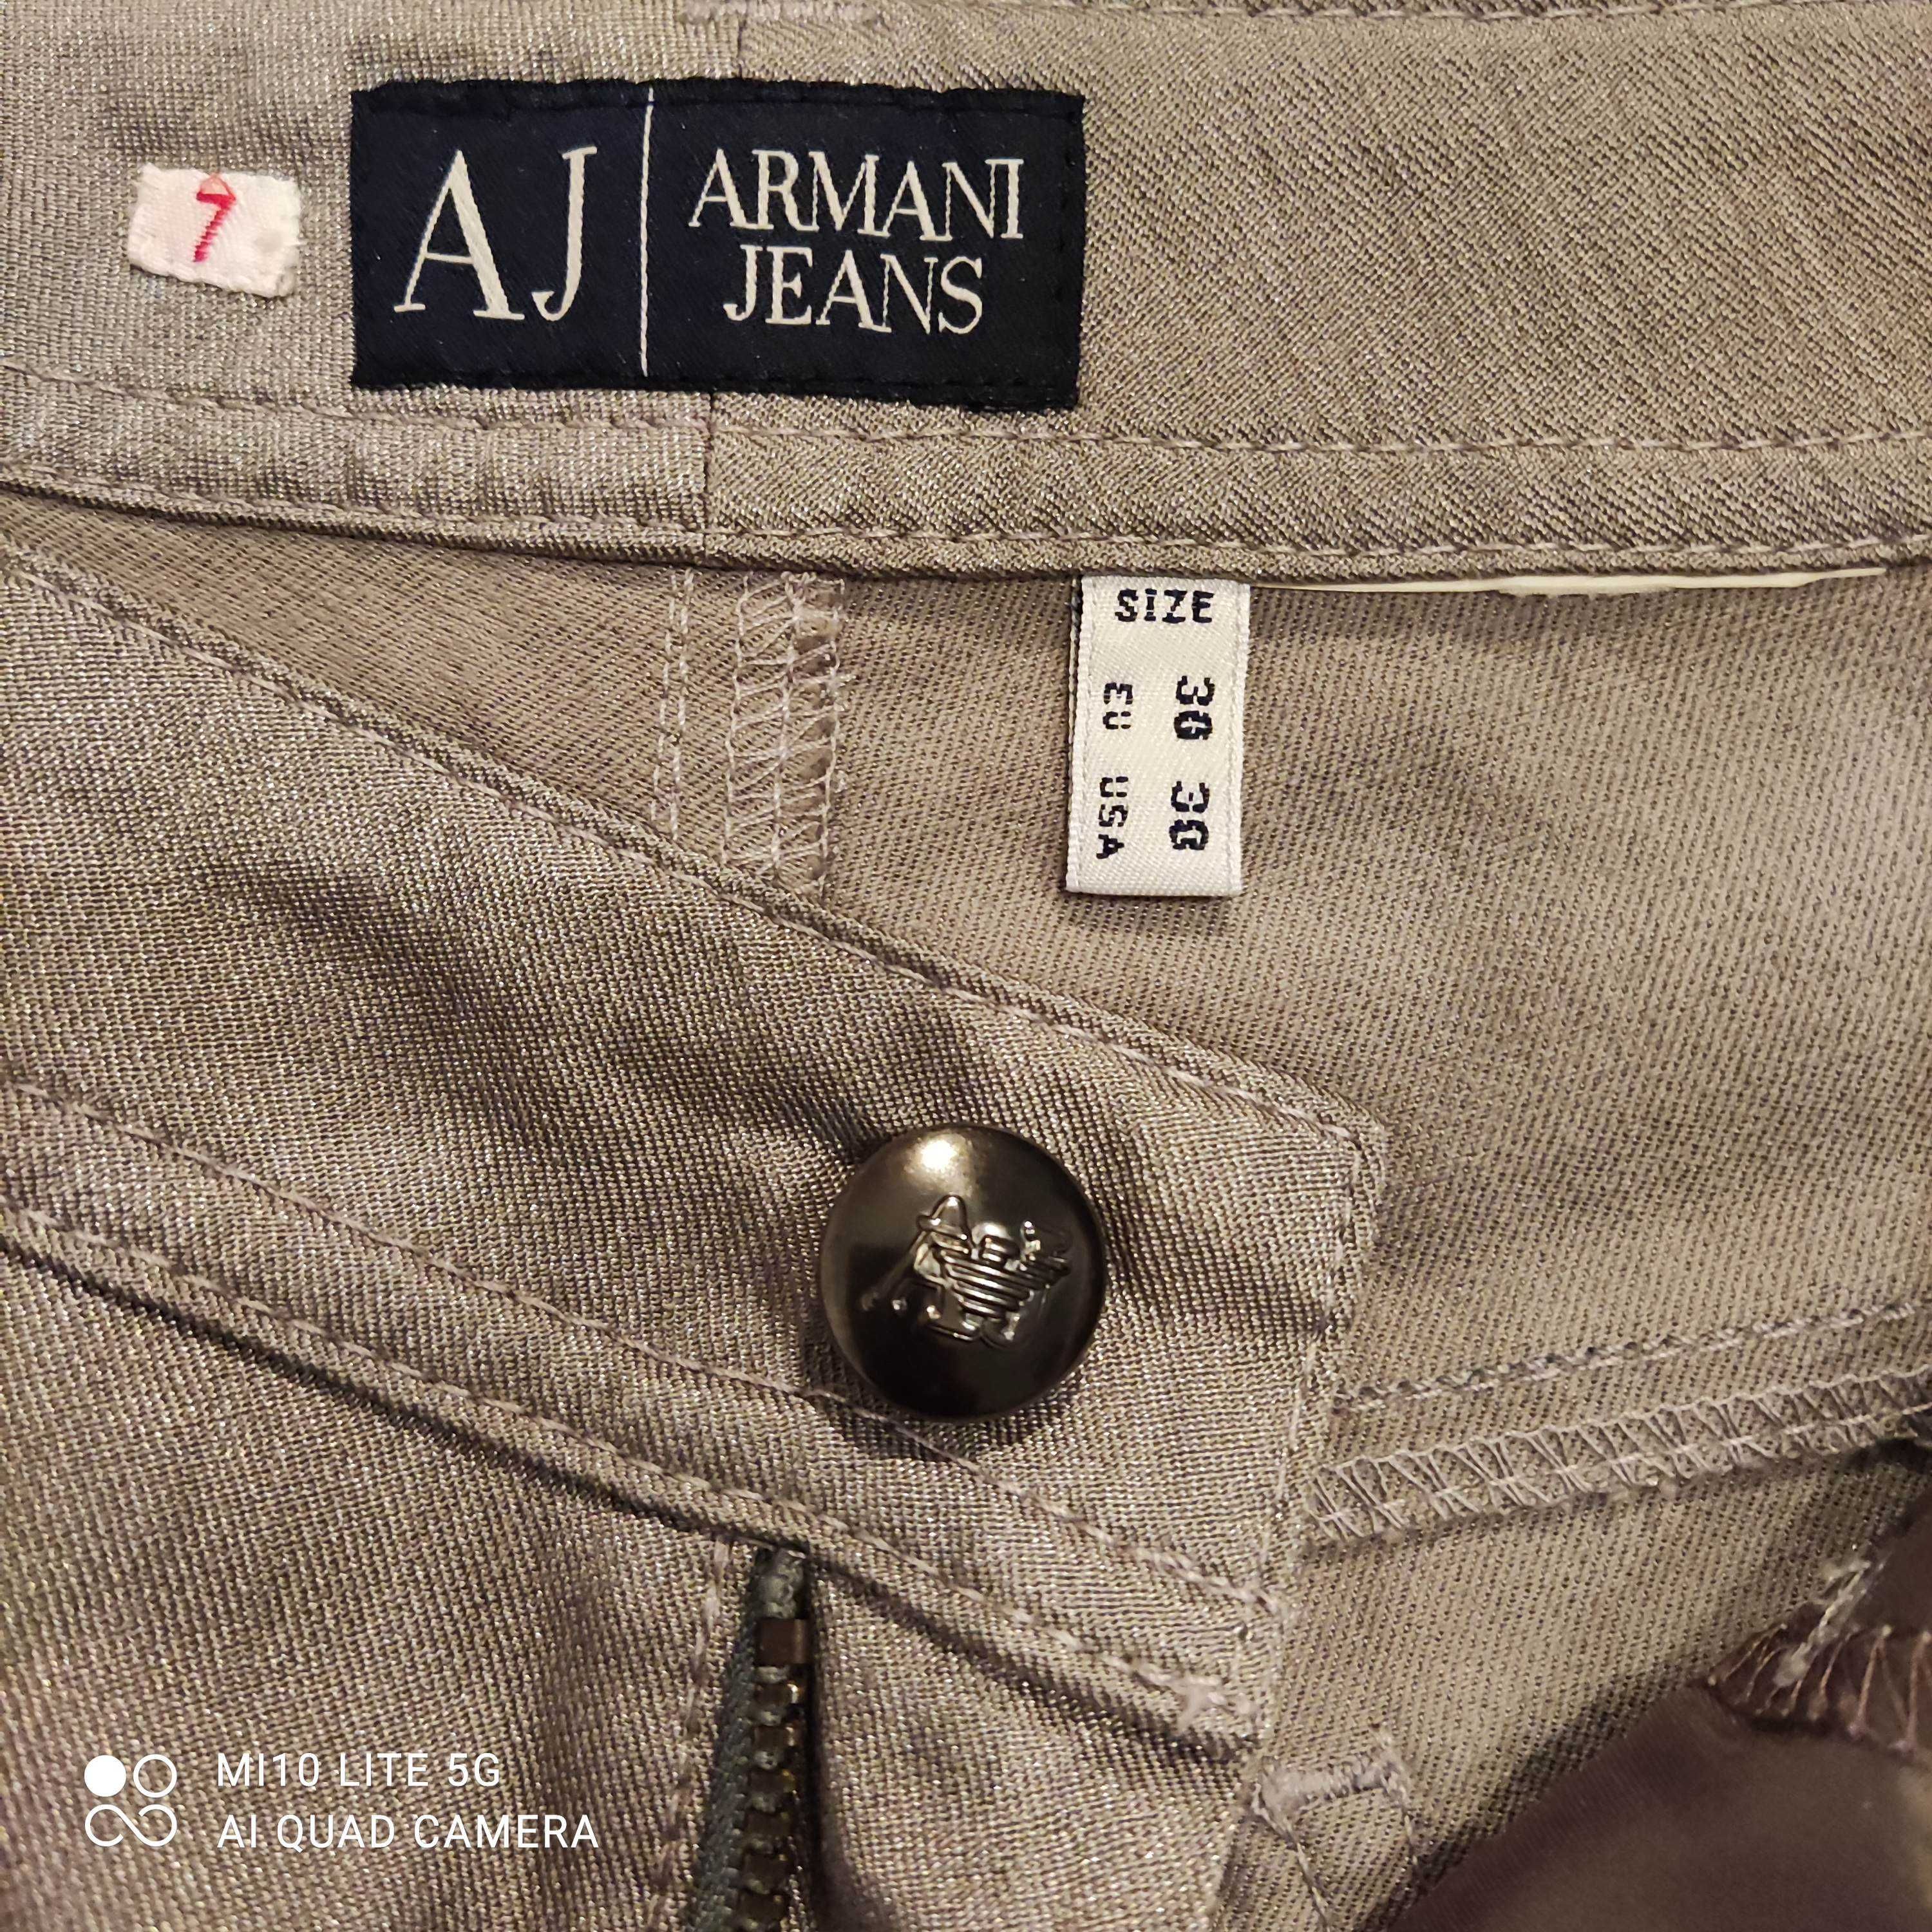 Calças cinzentas nr 38, Armani Jeans